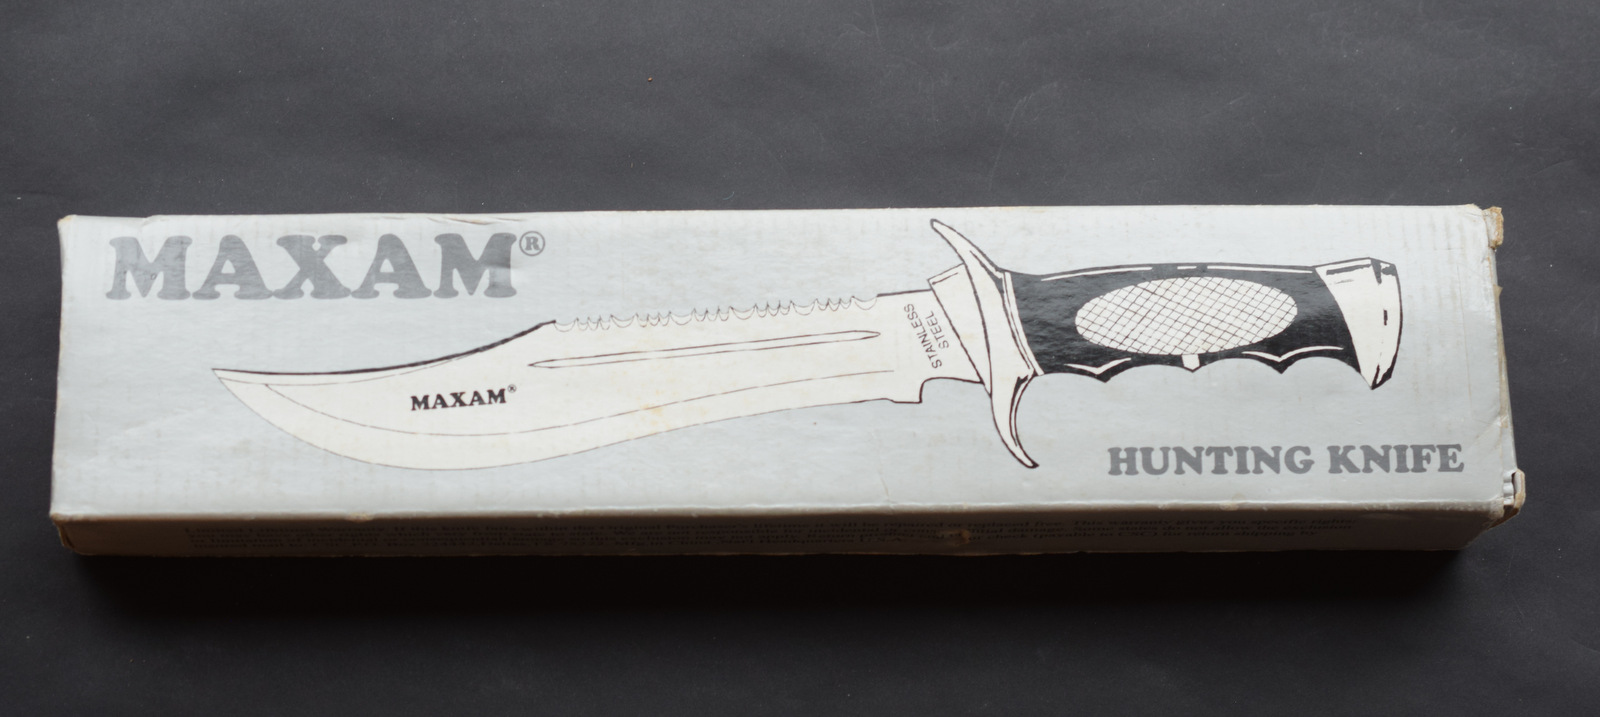 Large Maxam Hunting Knife And Sheath - Image 2 of 4